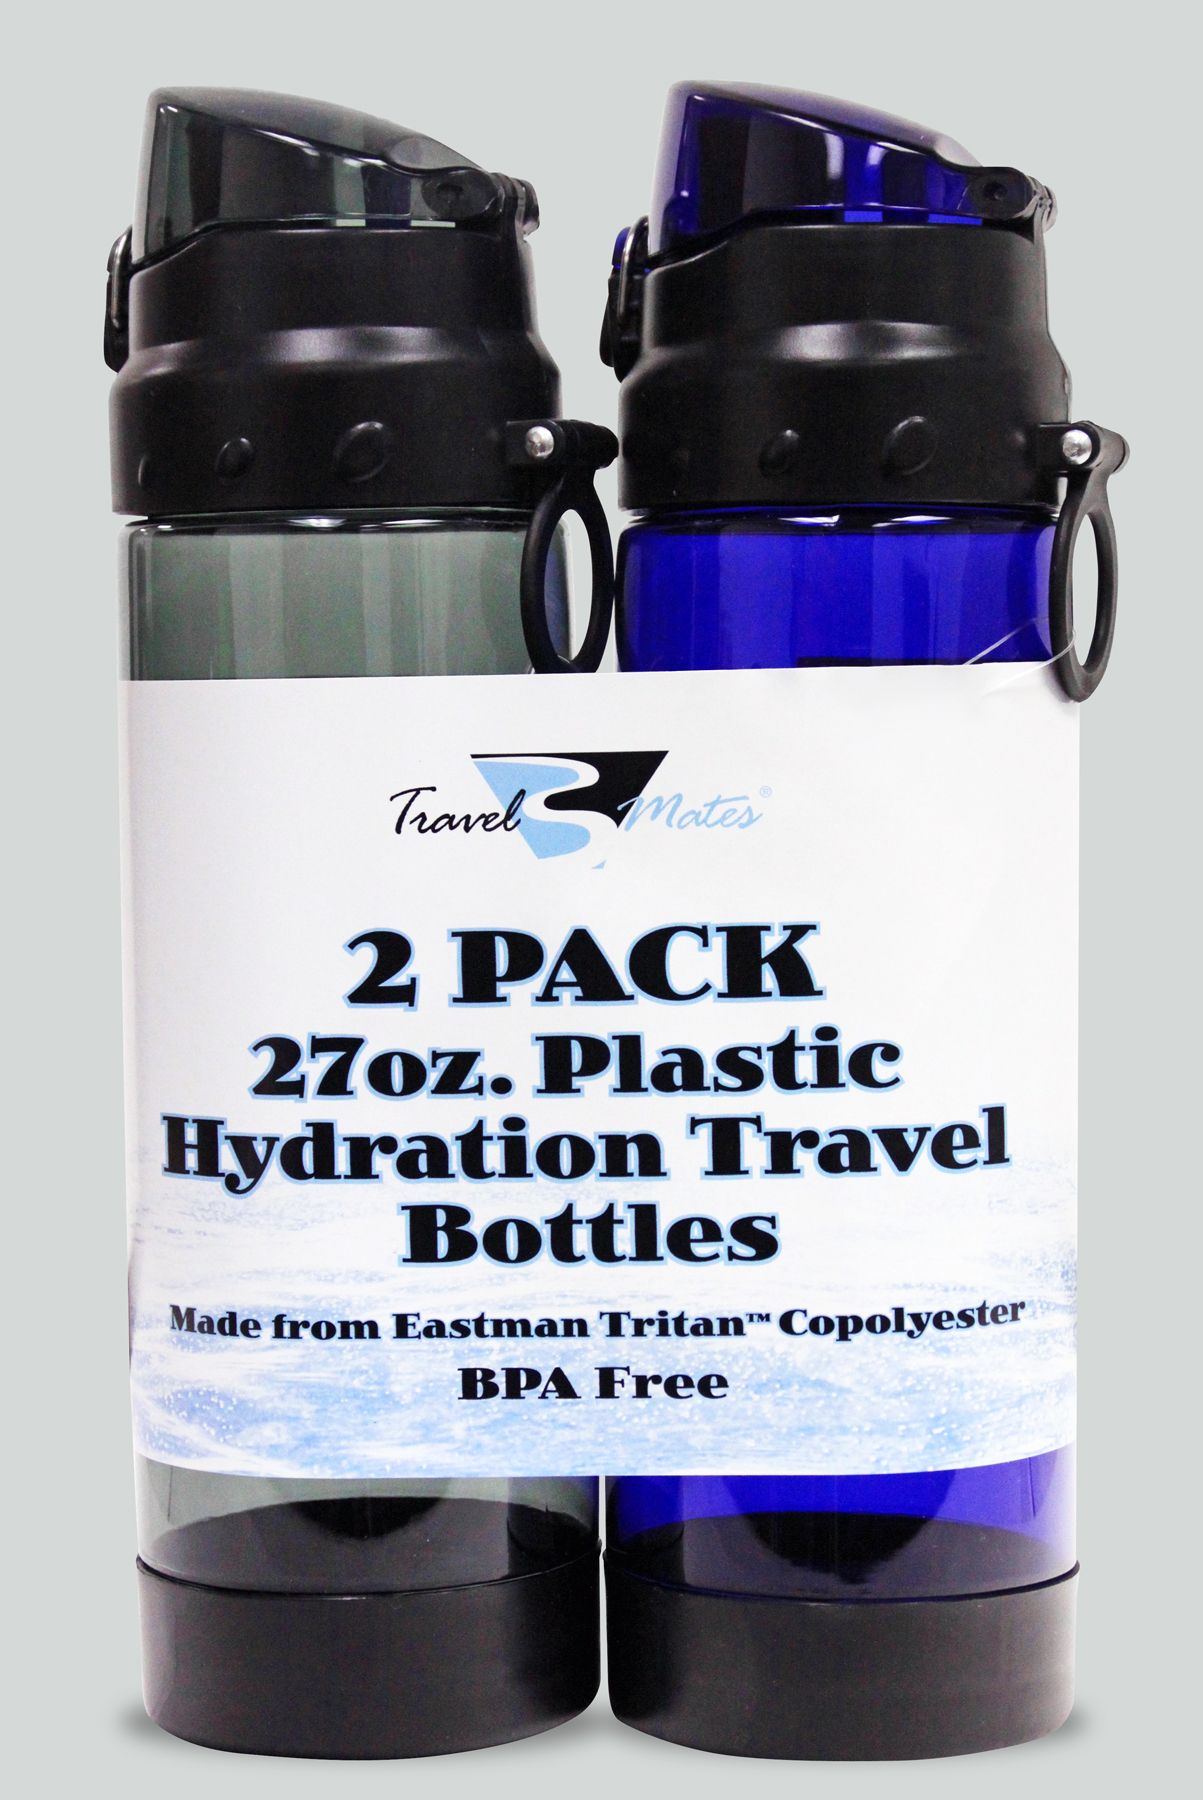 2 Pack Hydration Travel Bottles, 27oz